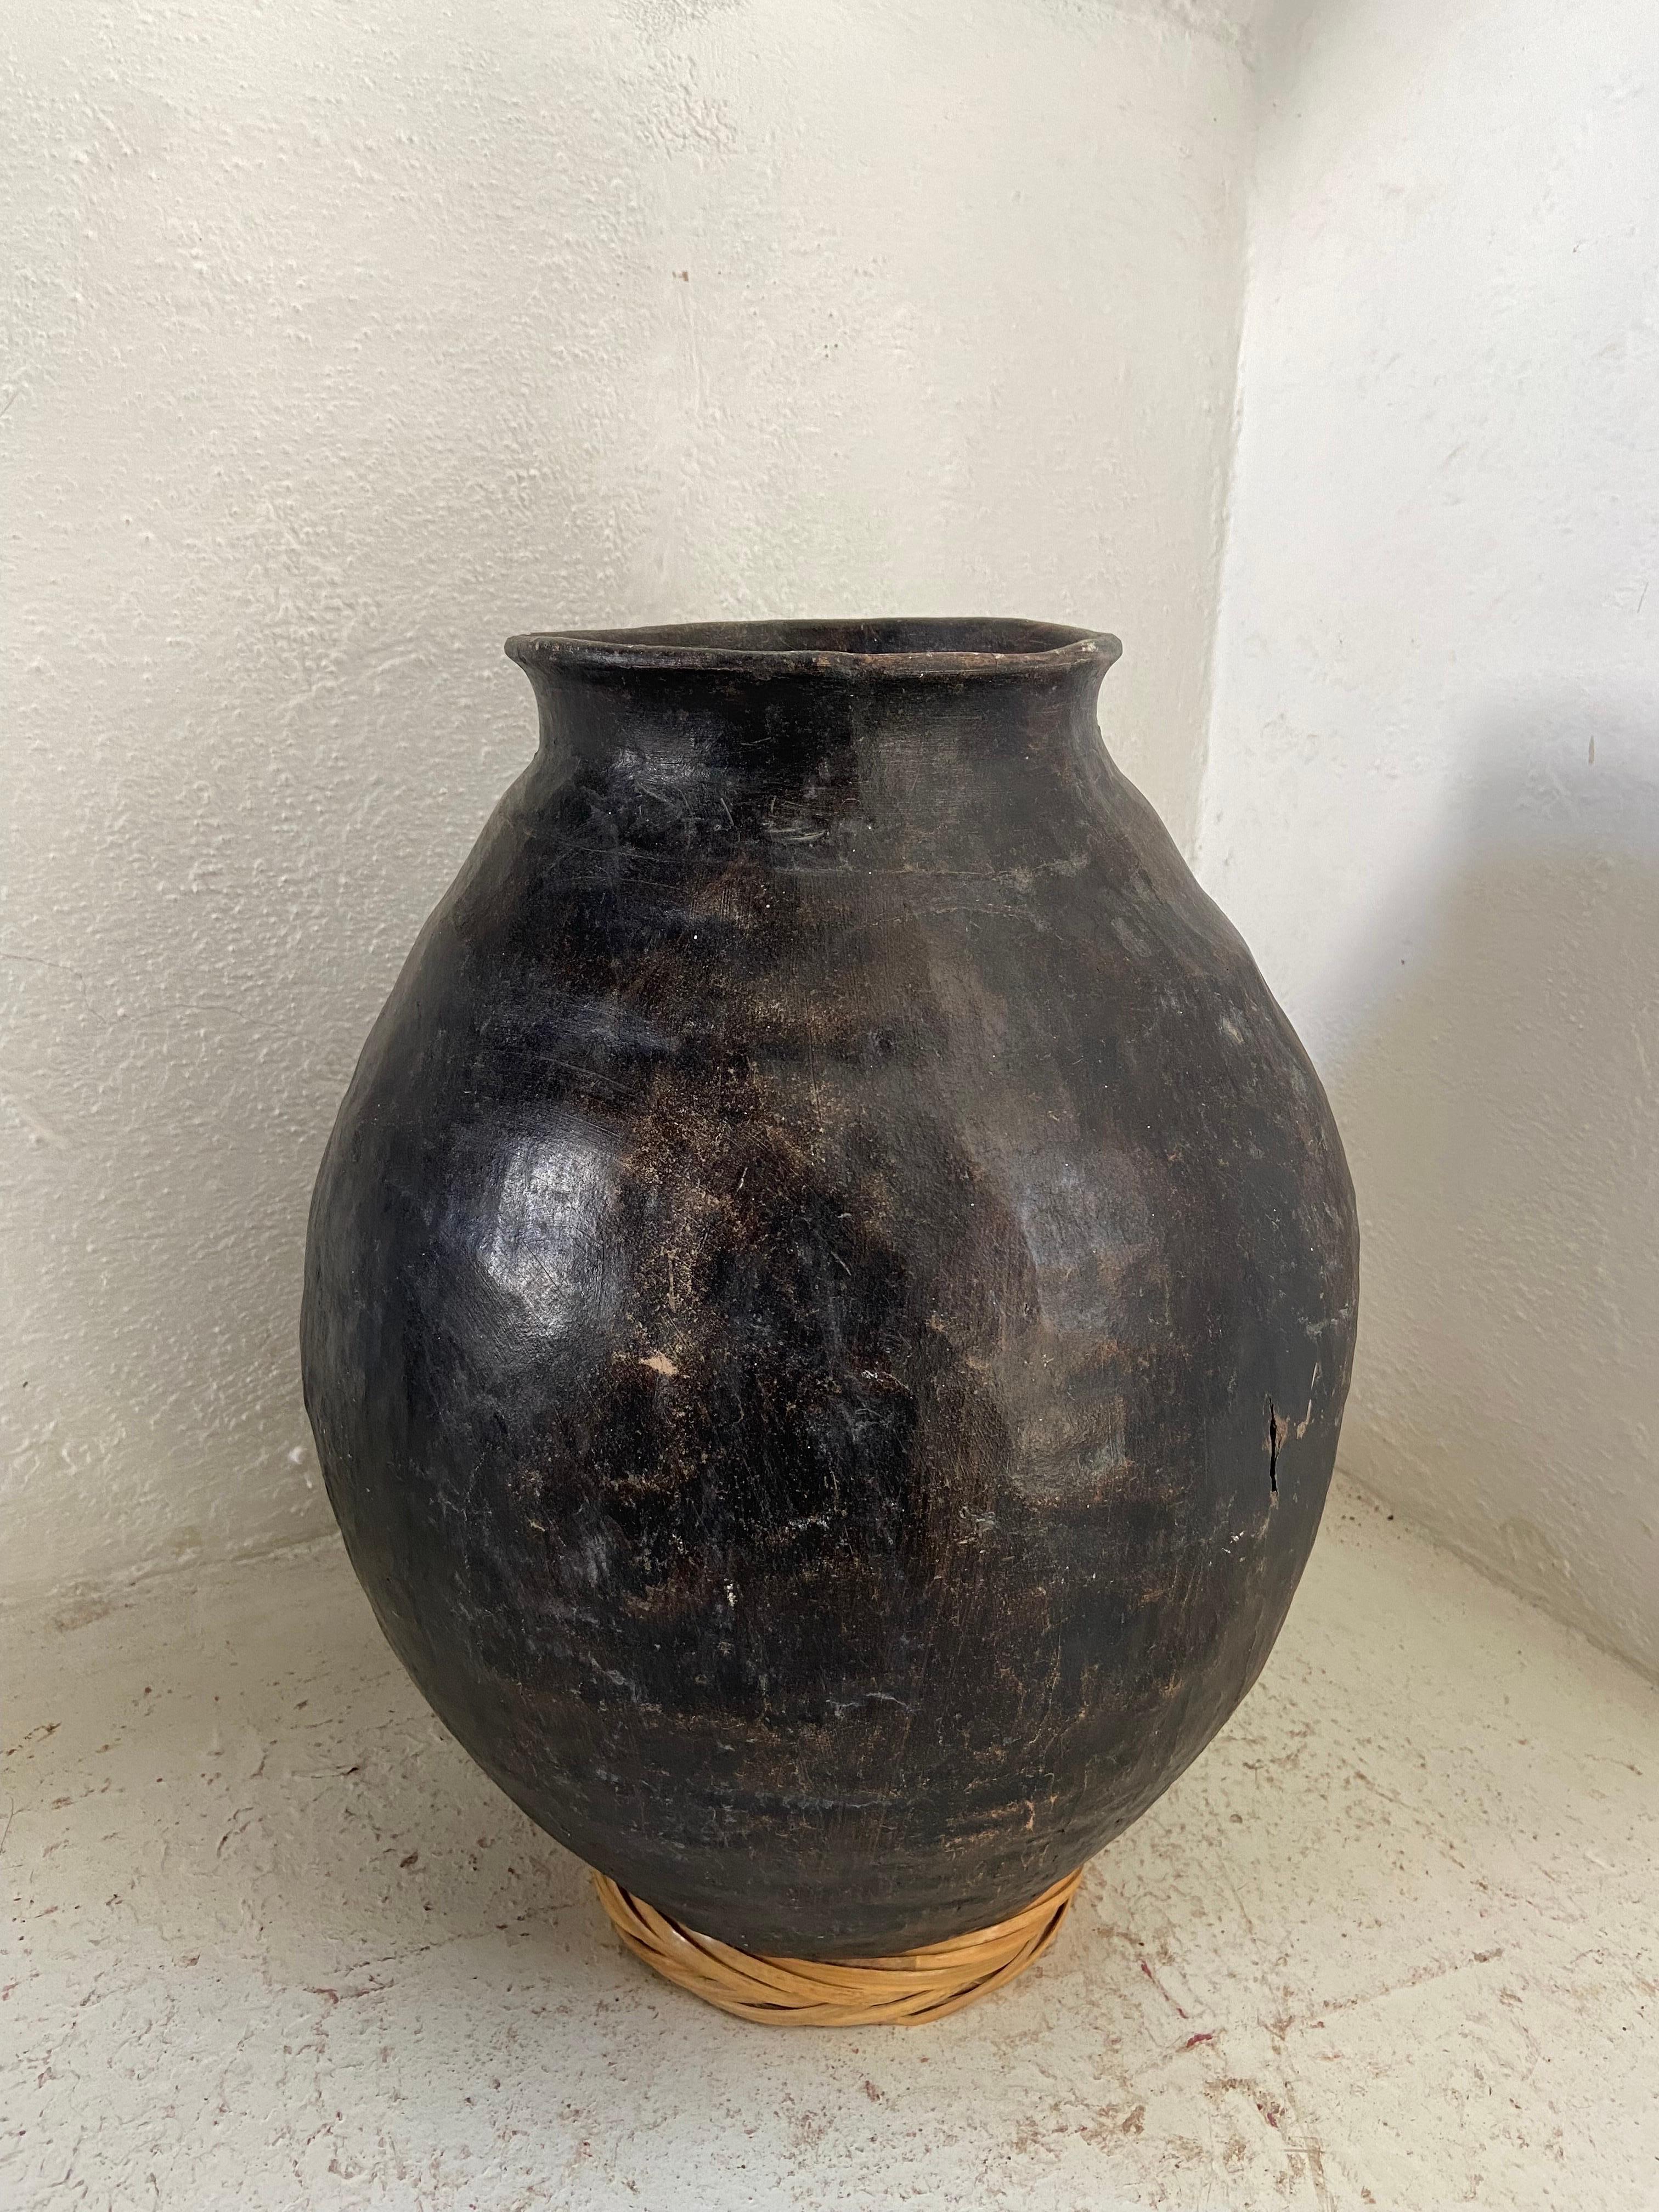 Fired Tarahumara Ceramic Water Vessel from Mexico, circa Early 1900s